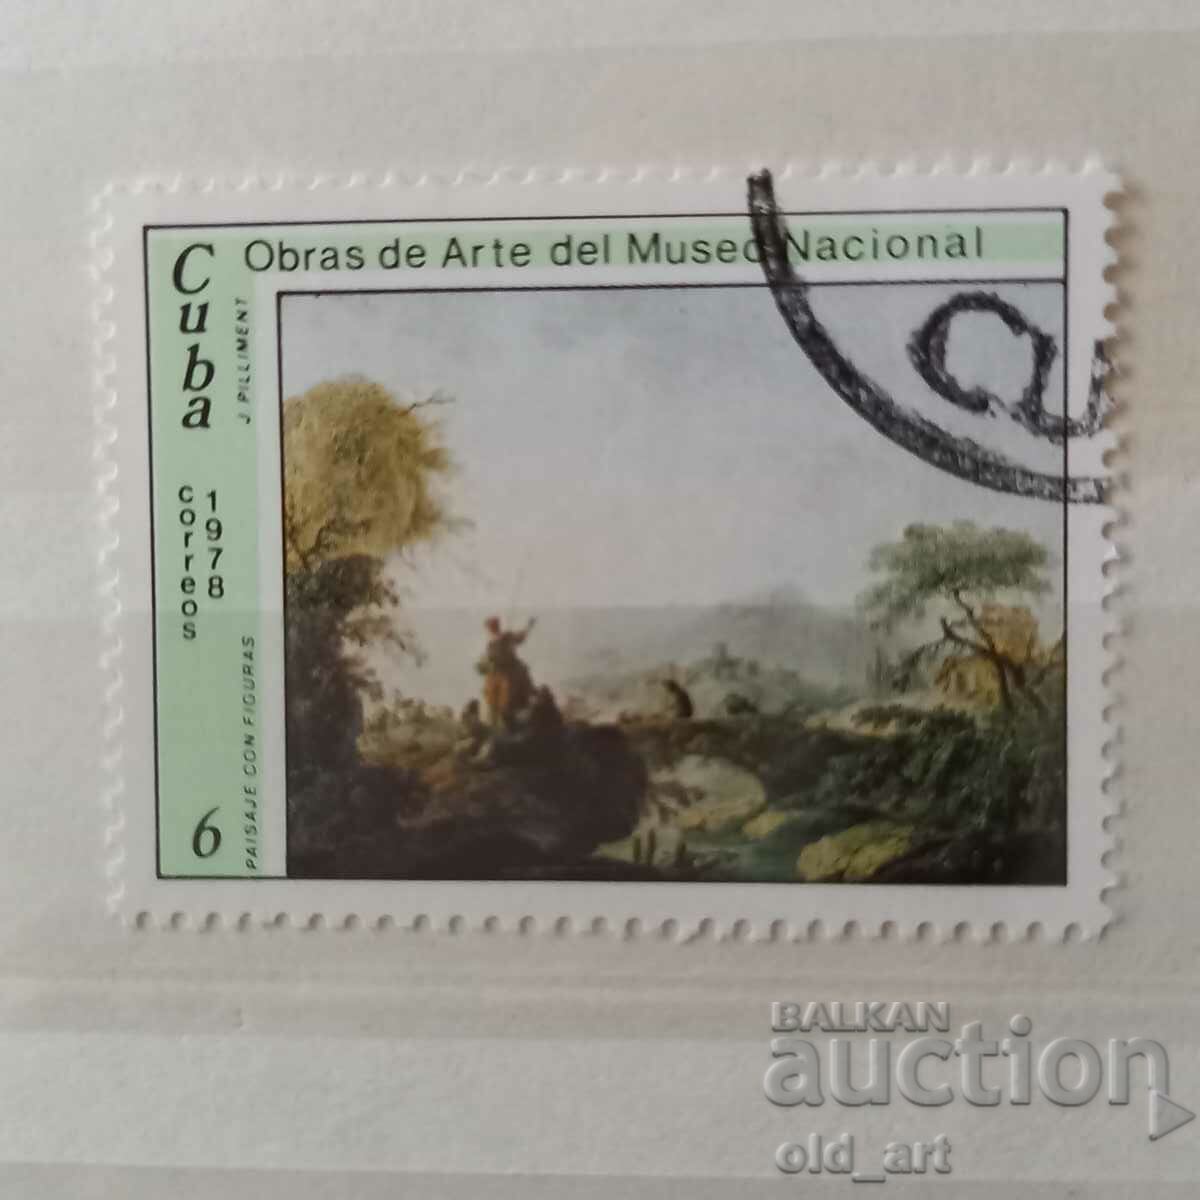 Postage stamp - Cuba, Paintings, Bridges